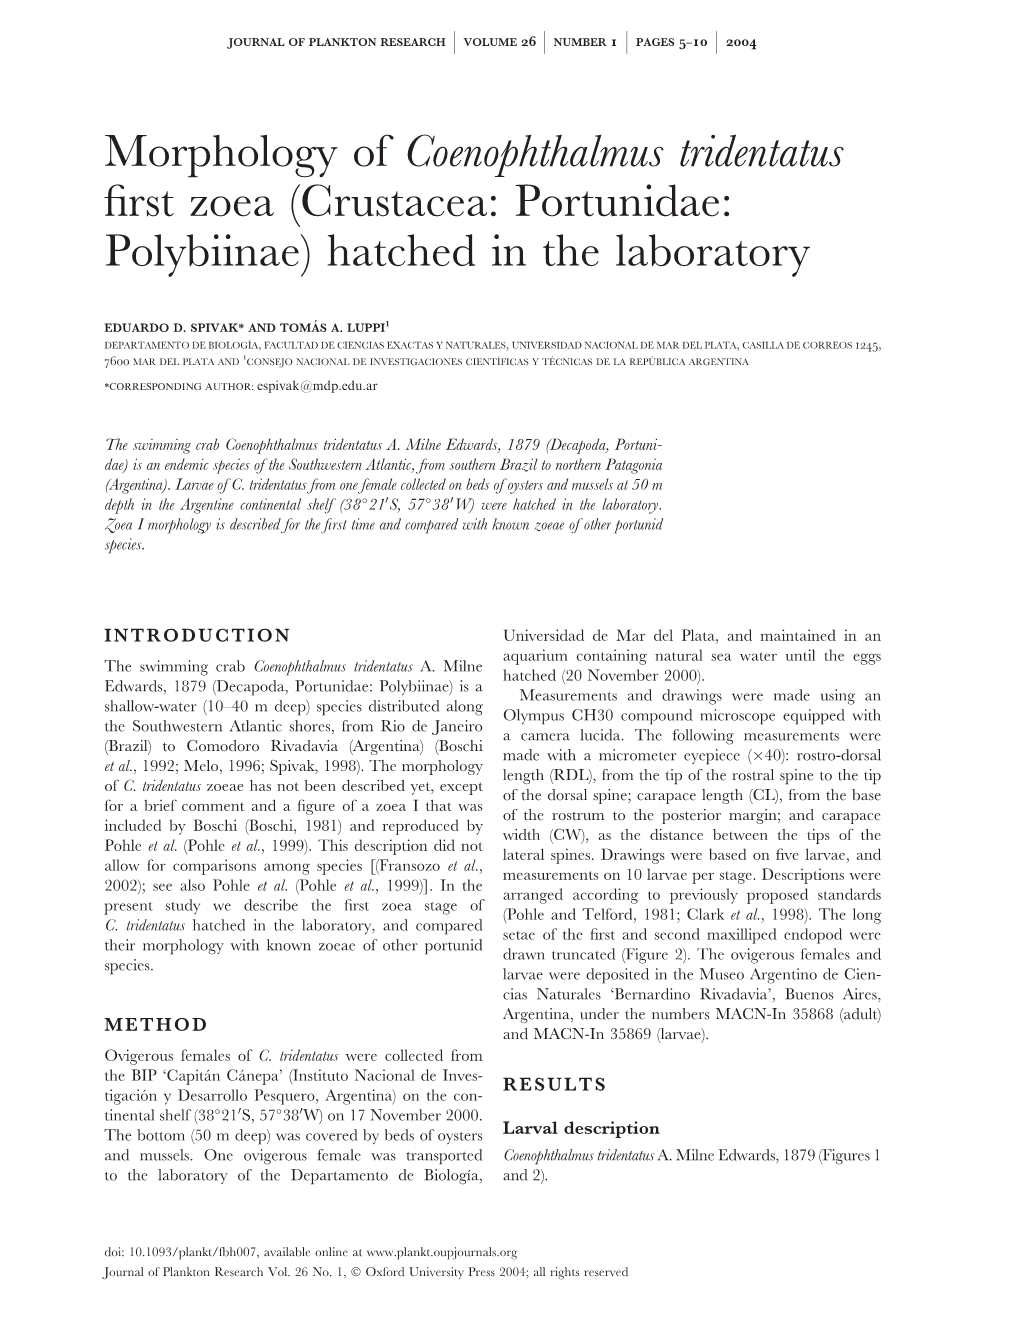 Morphology of Coenophthalmus Tridentatus First Zoea (Crustacea